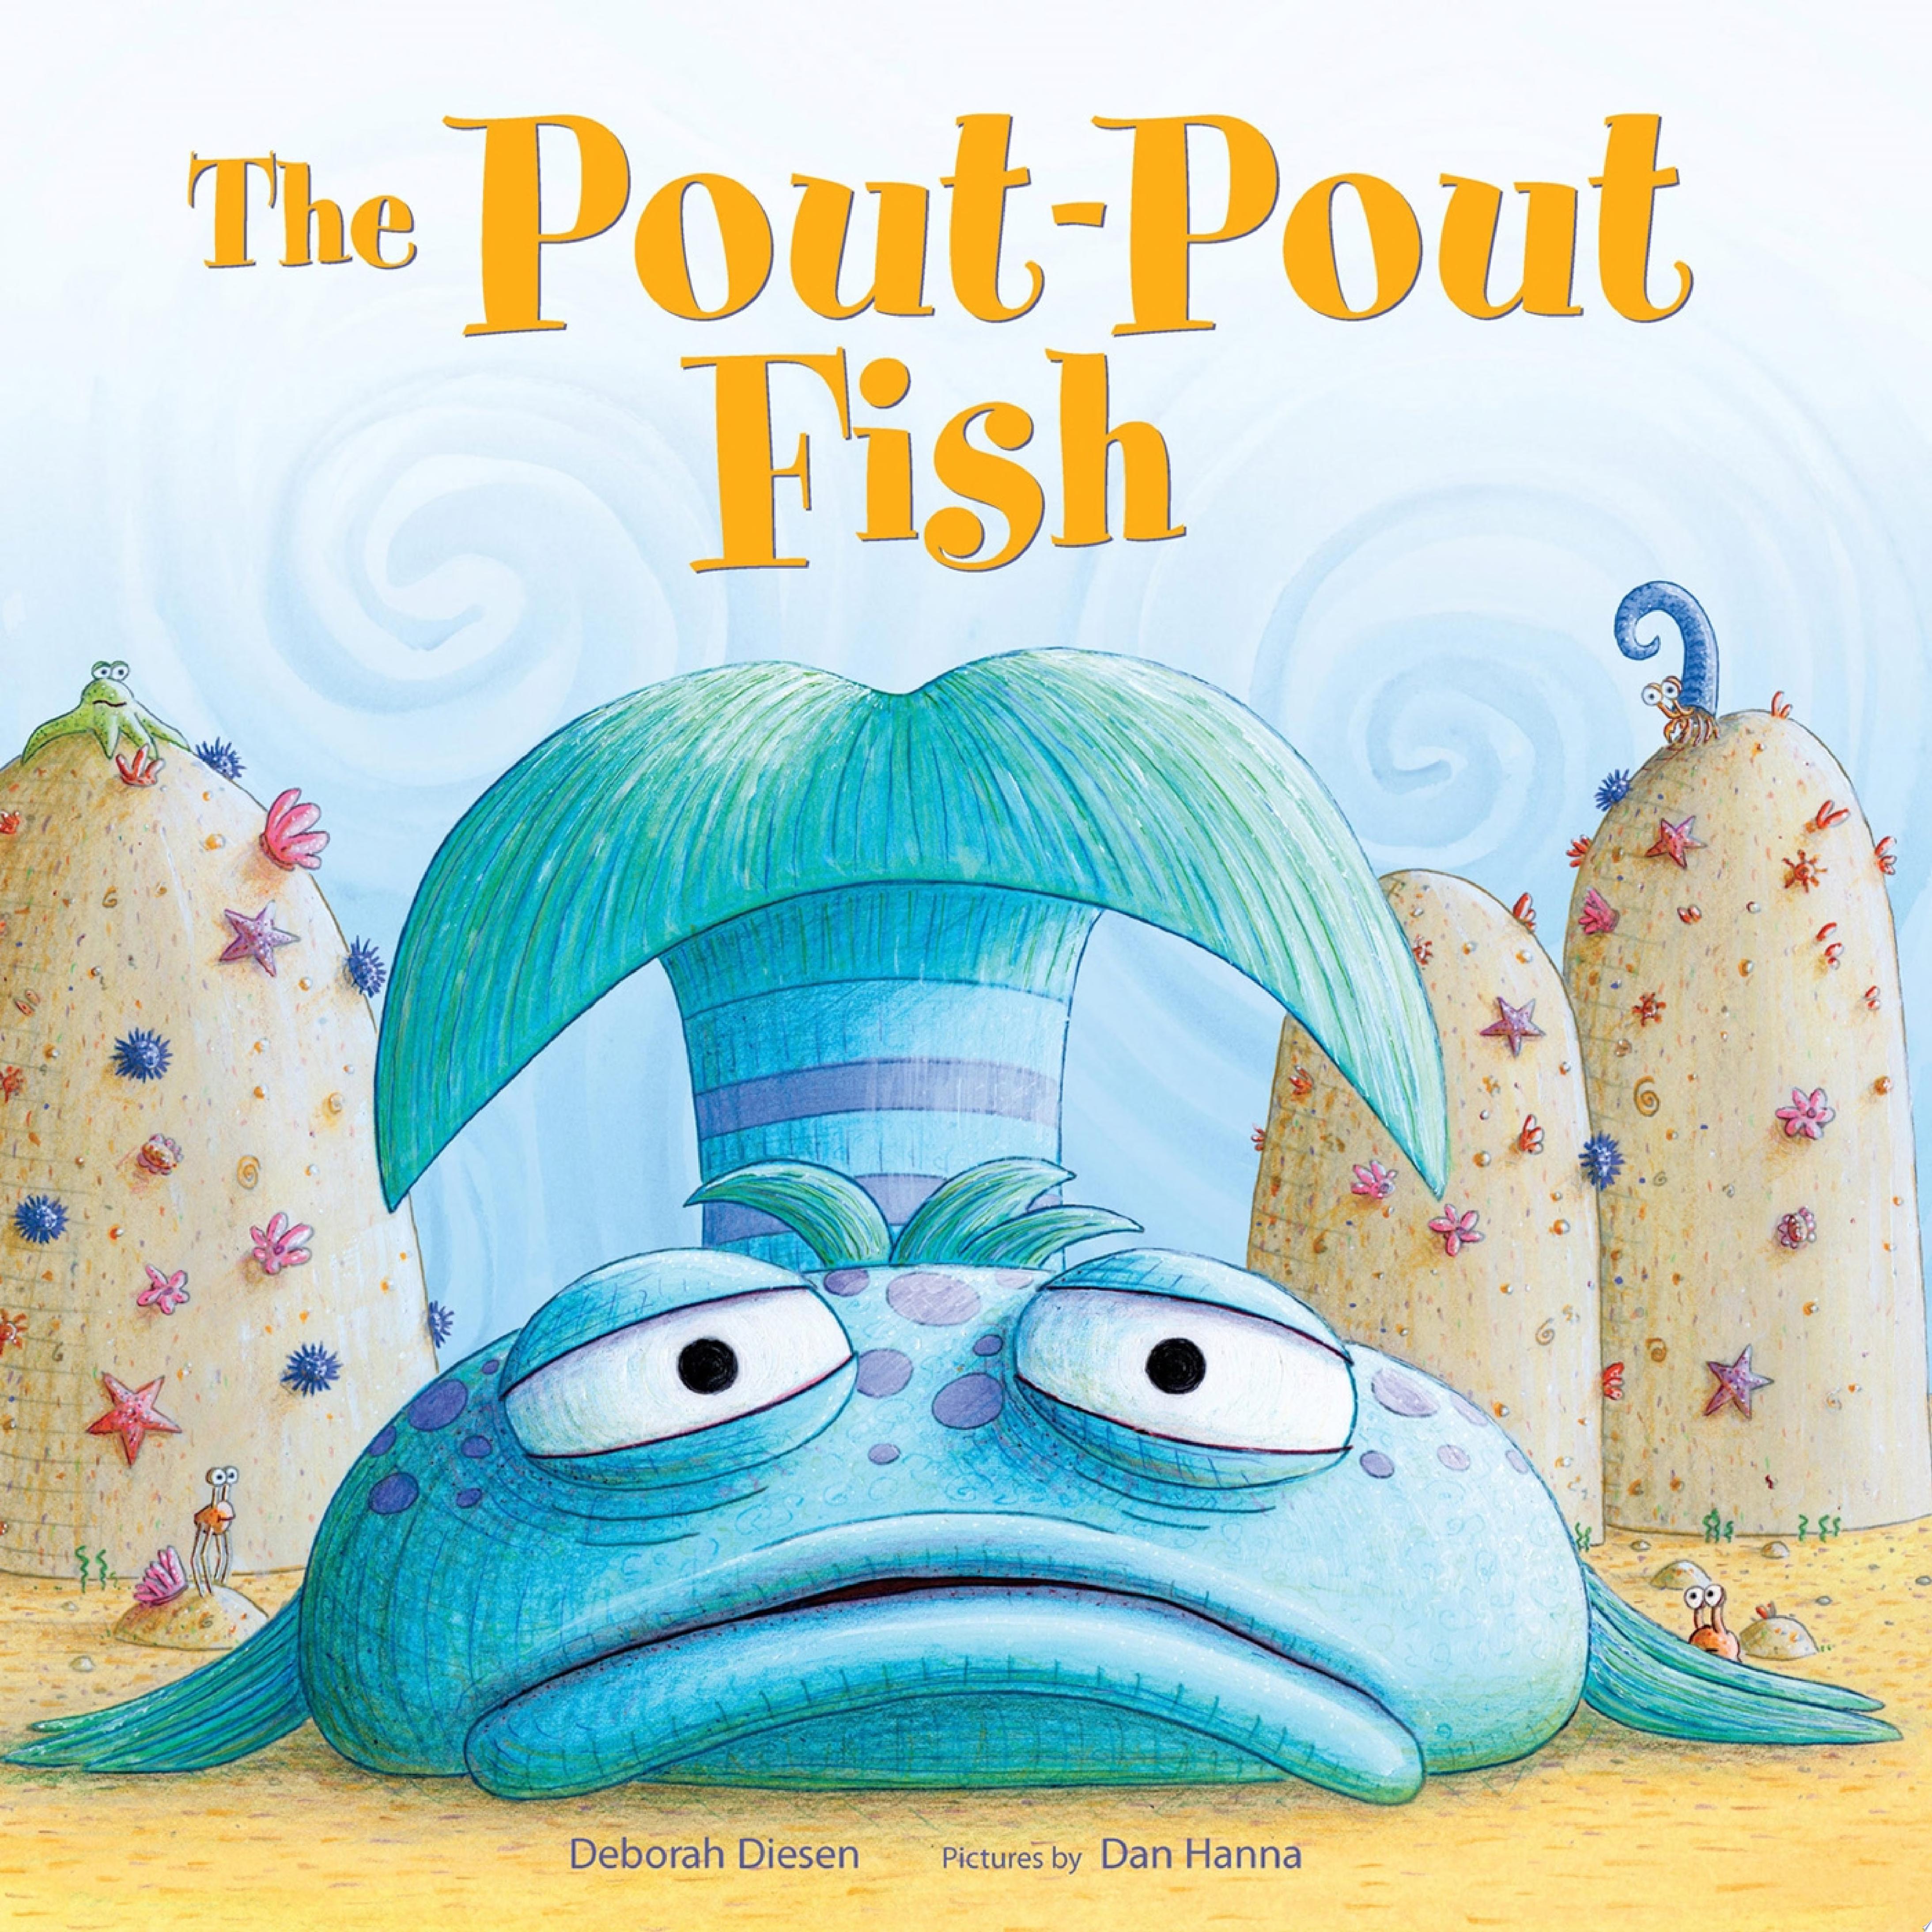 Image for "The Pout-Pout Fish"